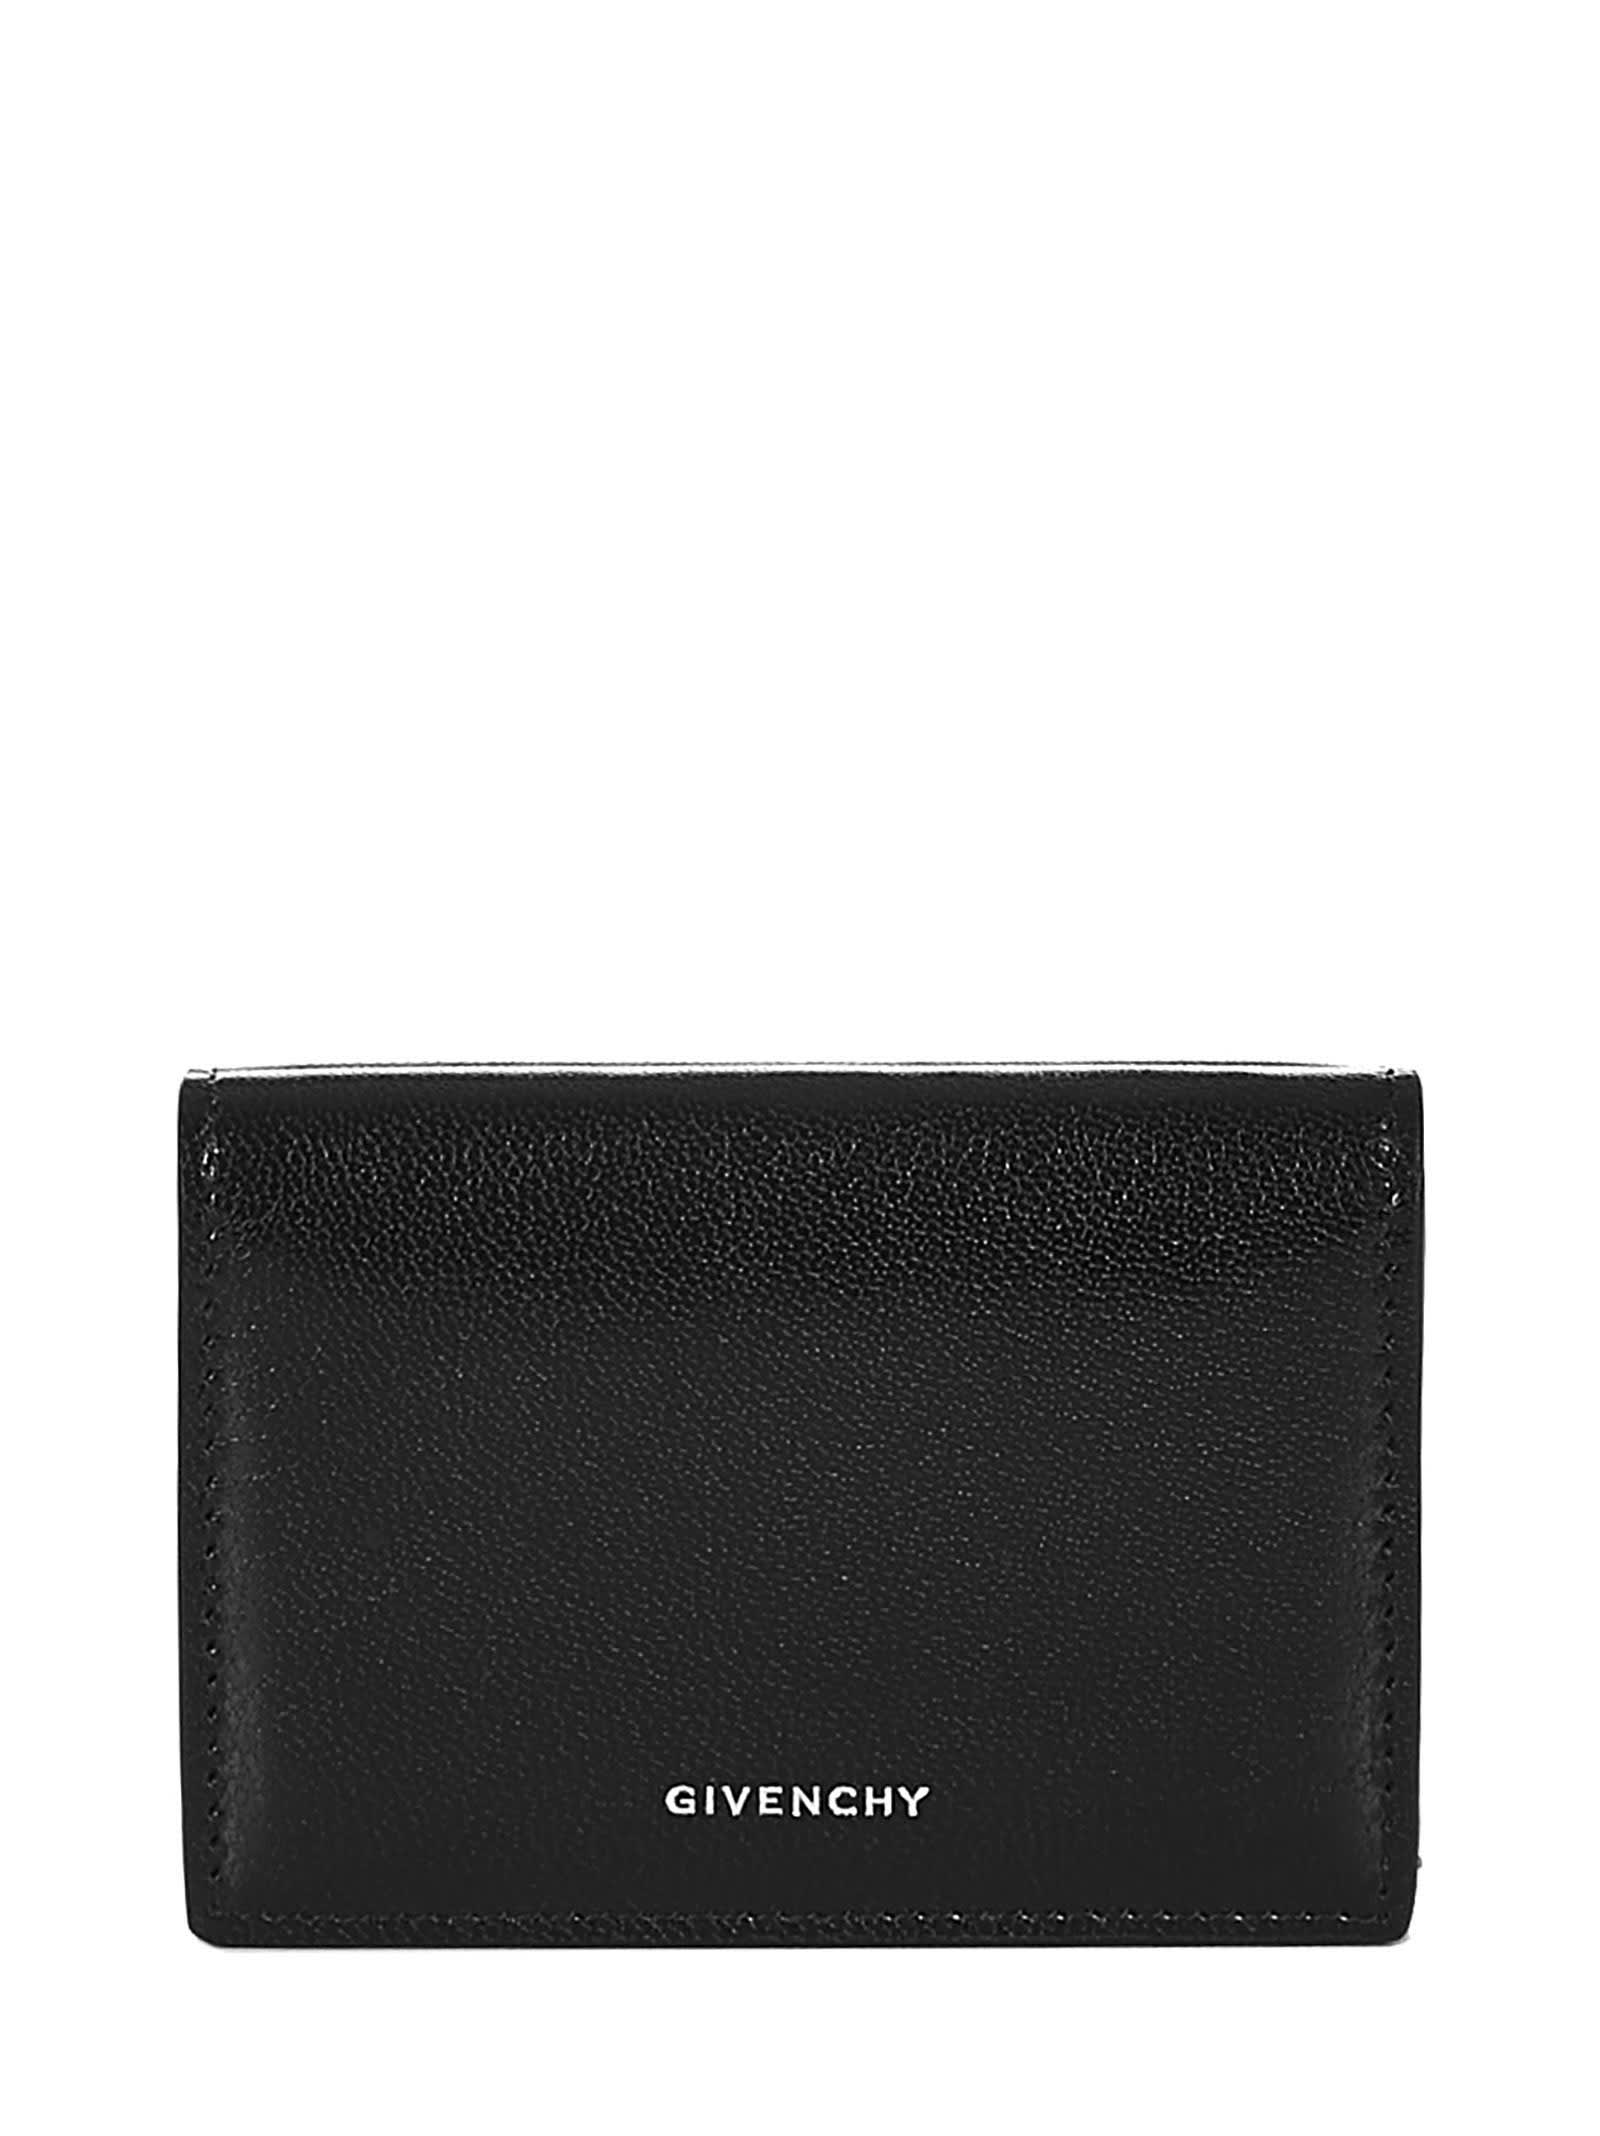 Givenchy Compact Edge Wallet